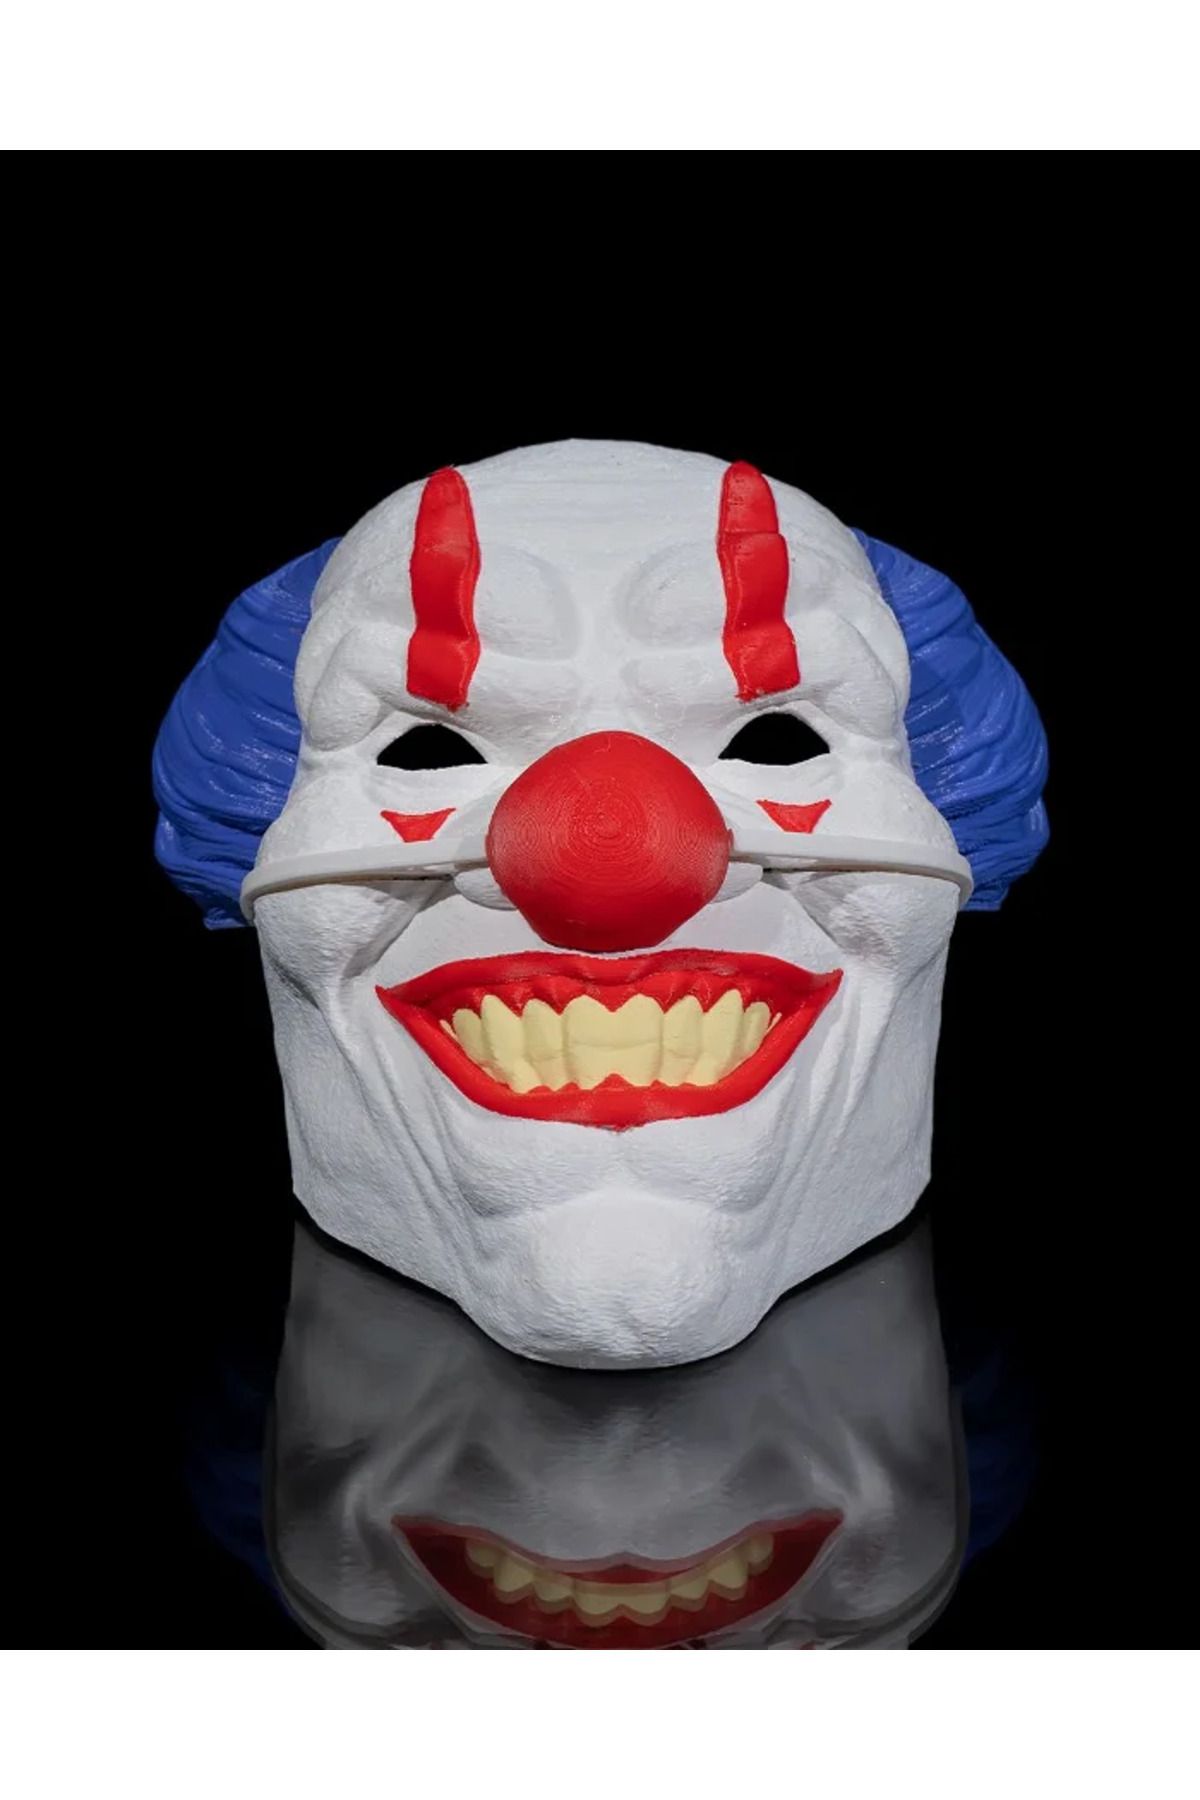 CNQR Joker Gülen Yüz Maskesi Update Joker Cosplay Maske Boyalı